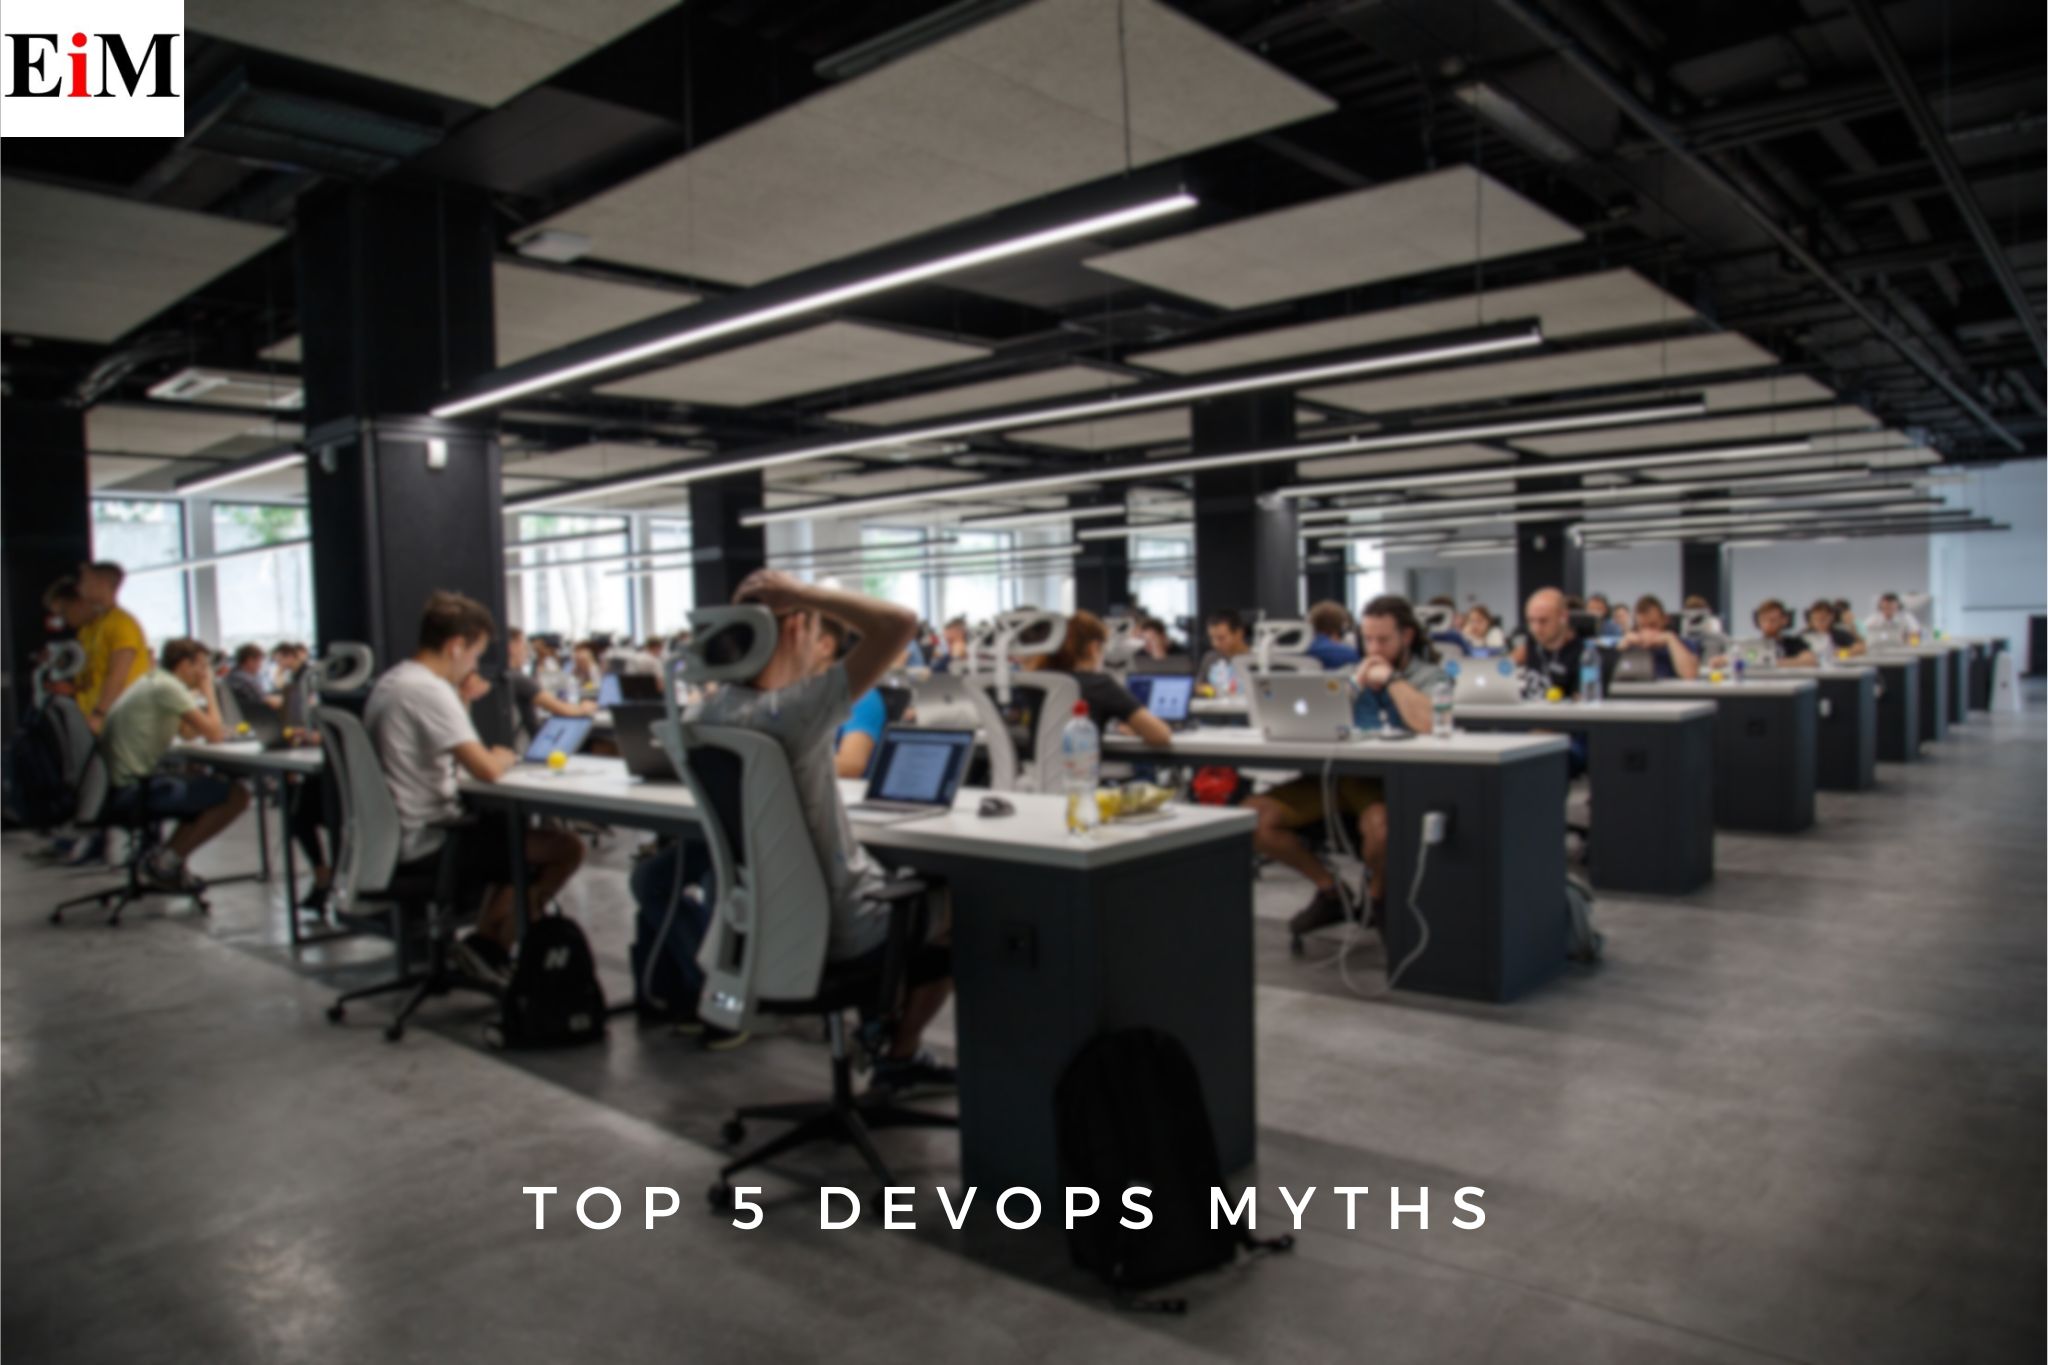 The Truth About DevOps: Debunking the Top 5 DevOps Myths